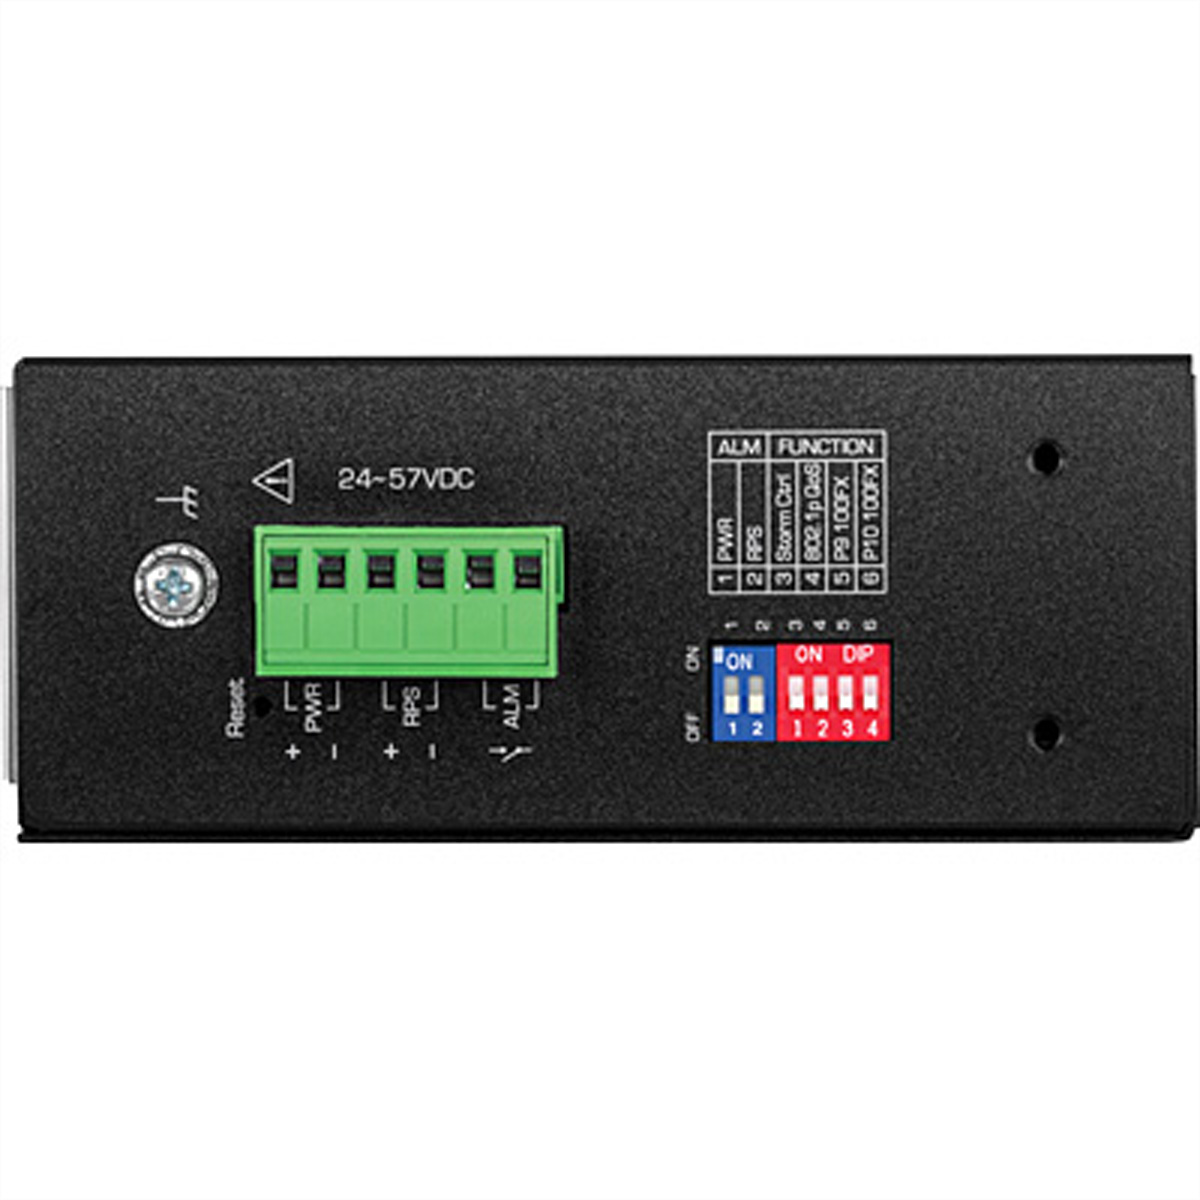 10-Port Industrial Gigabit TI-PG102i Industrial Managed DIN-Rail Switch TRENDNET PoE+ Networking